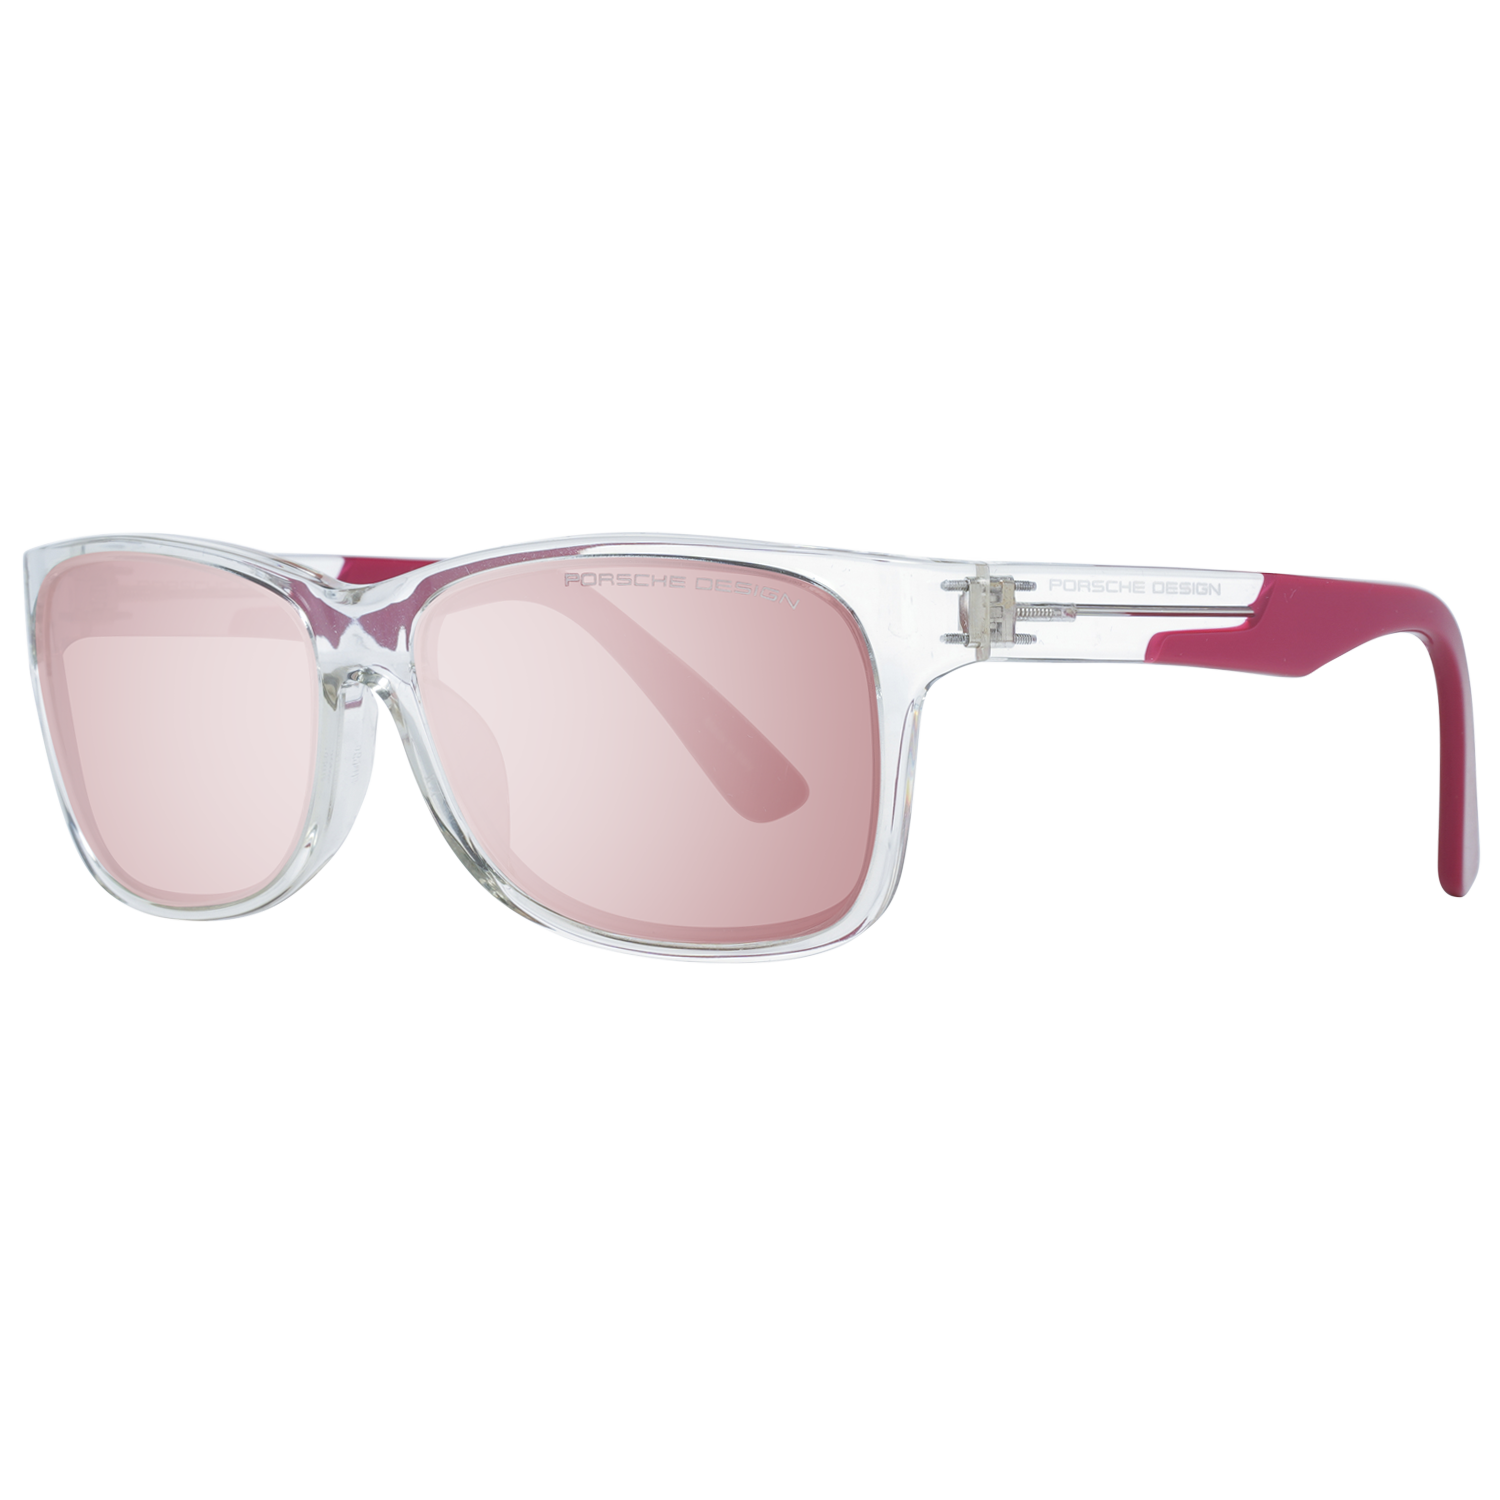 Porsche Design Sunglasses Porsche Design Sunglasses P8907 D 62 Transparent Eyeglasses Eyewear UK USA Australia 